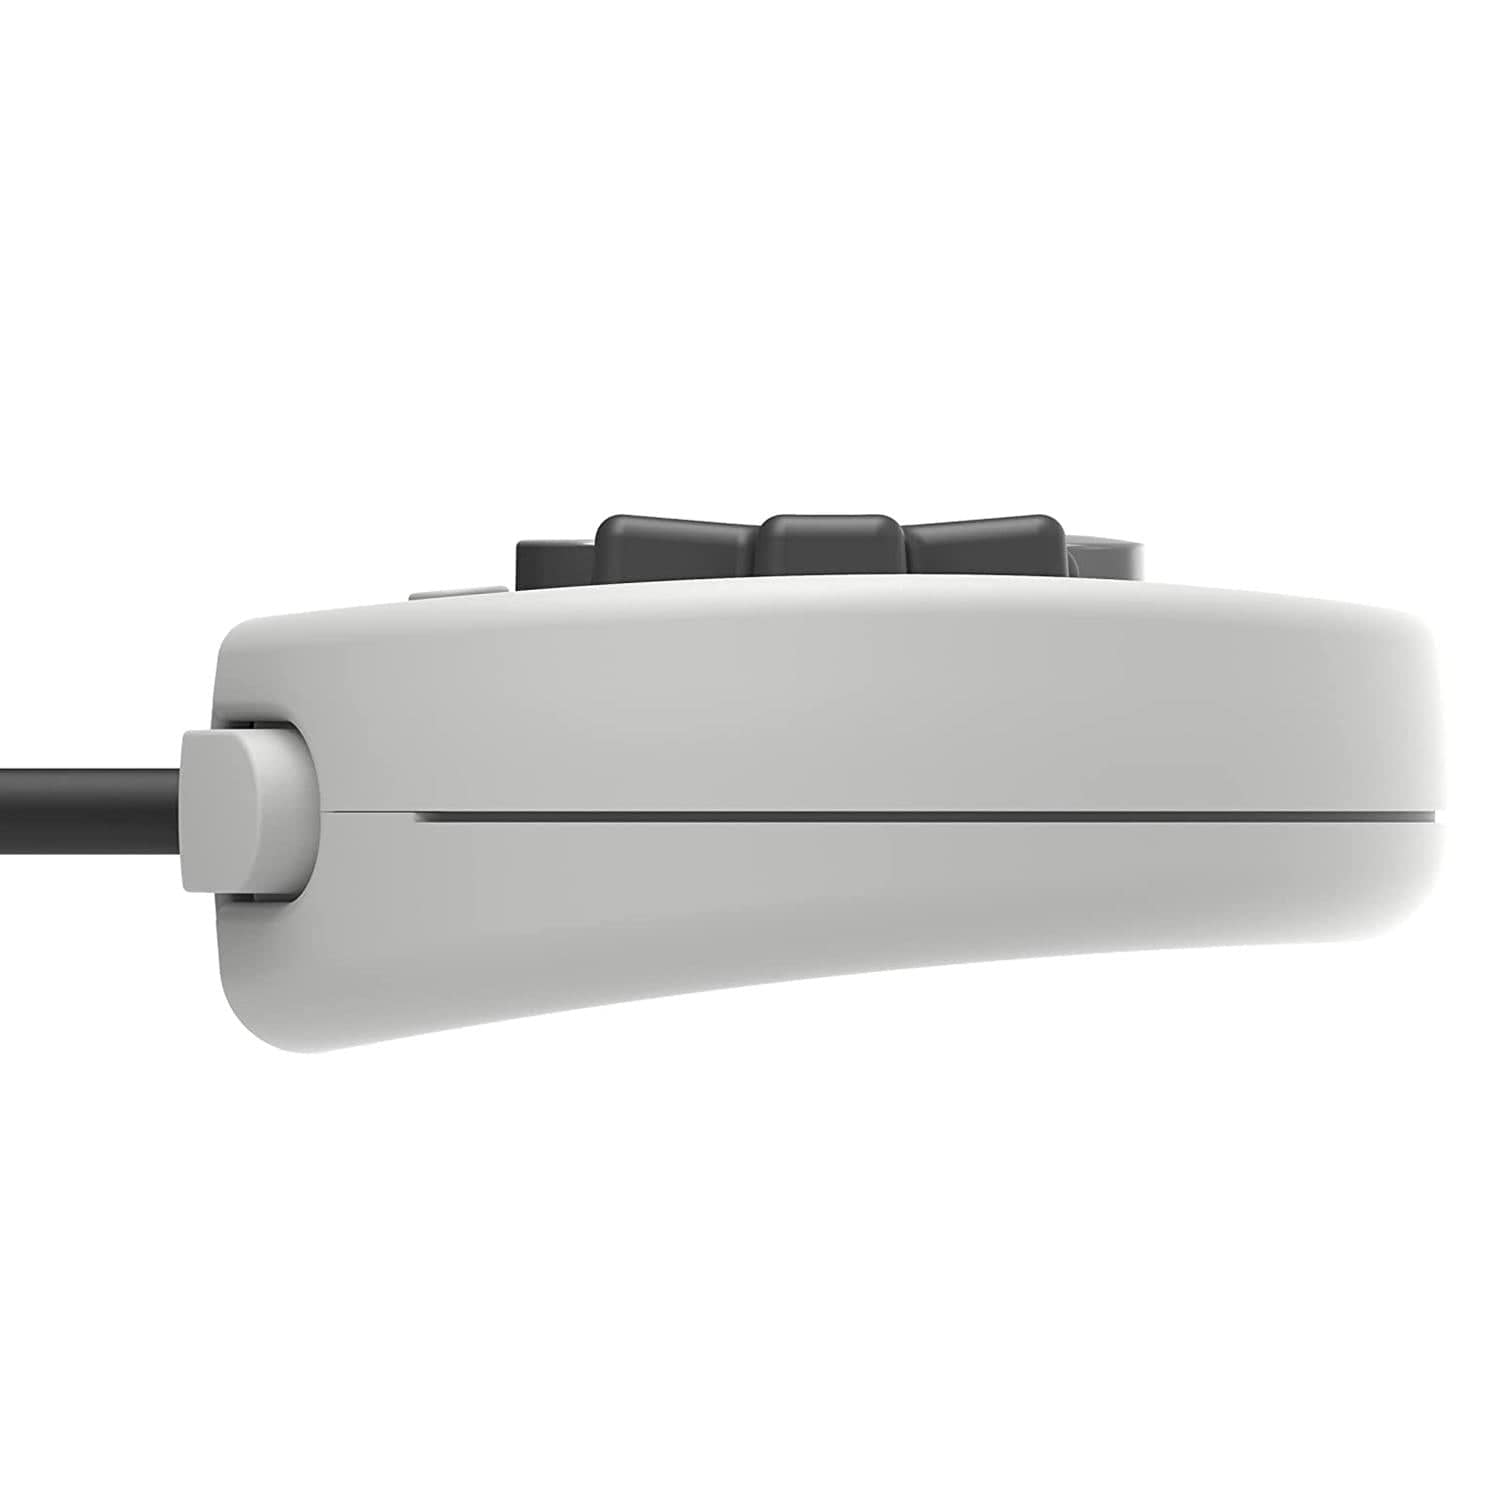 Retro-Bit Legacy16 Wired USB Controller - Classic Grey - The Pi Hut